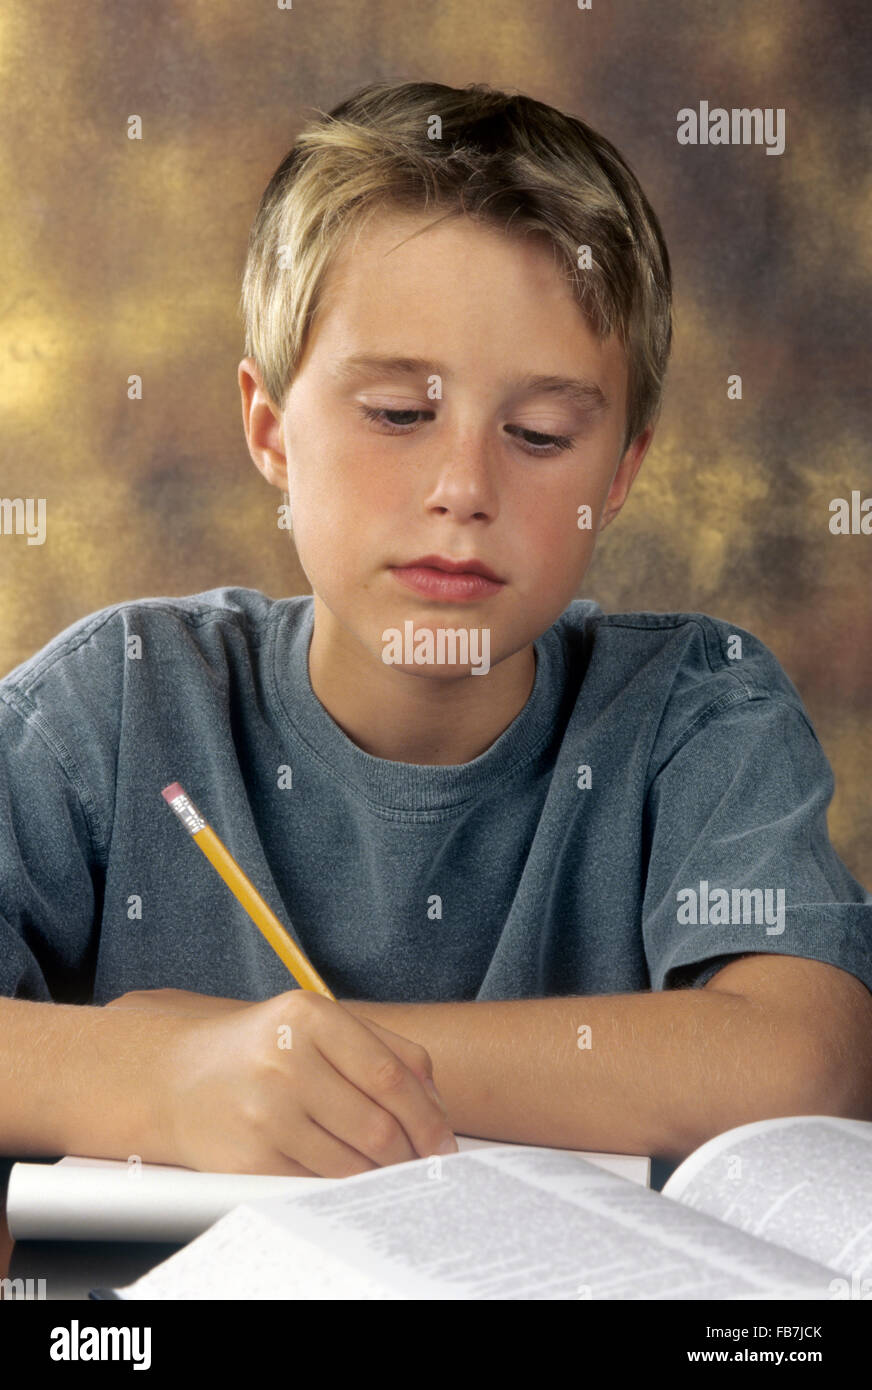 boy doing homework Stock Photo